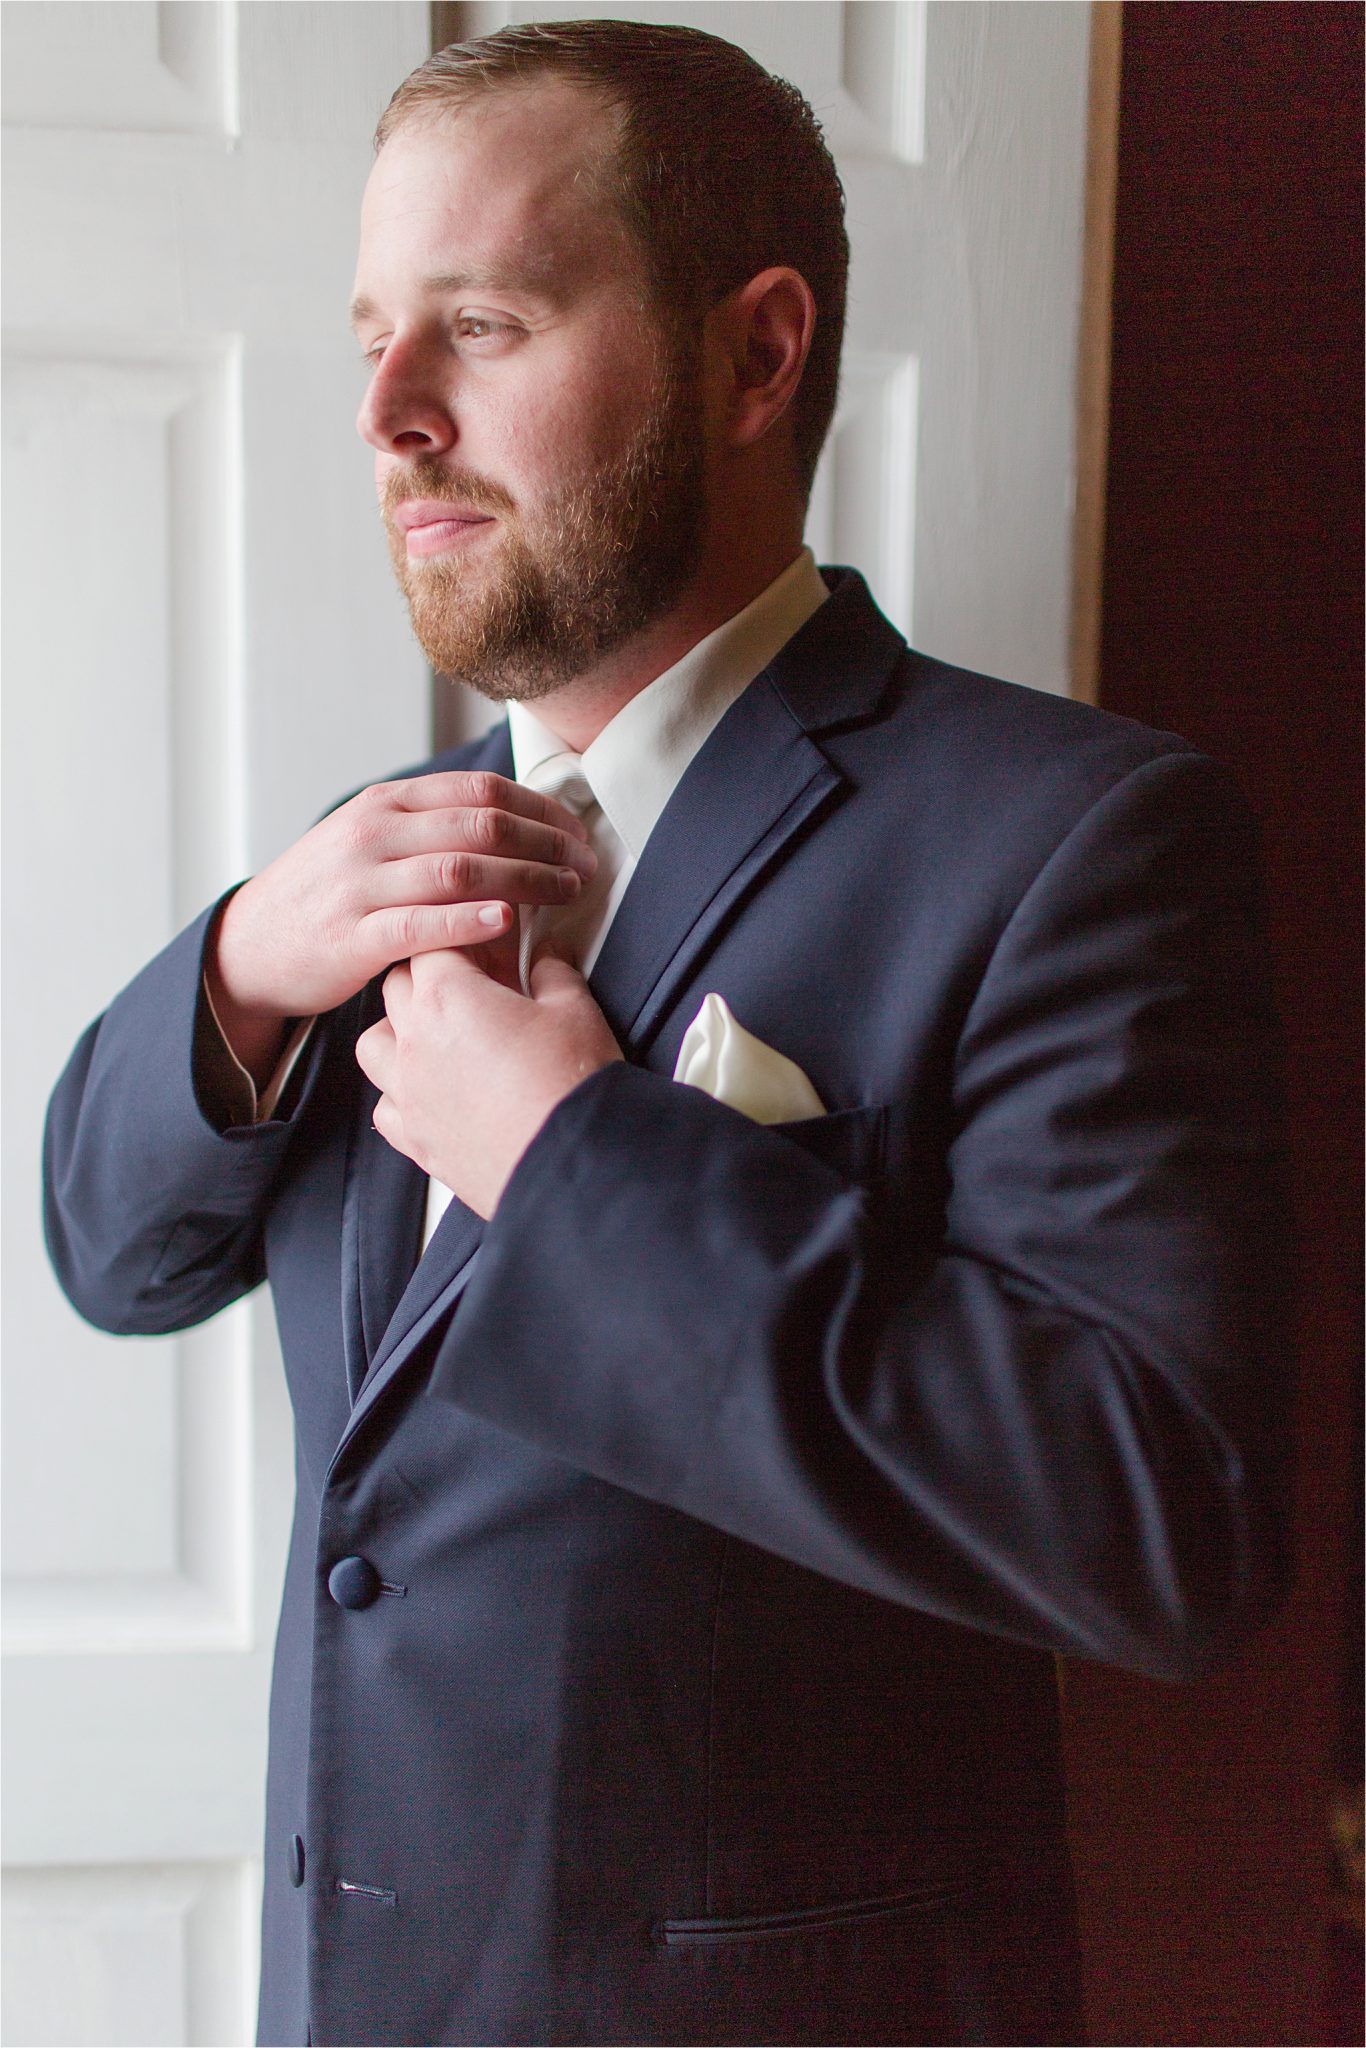 Groom-beard-navy suit-redhead-ivory handkerchief 